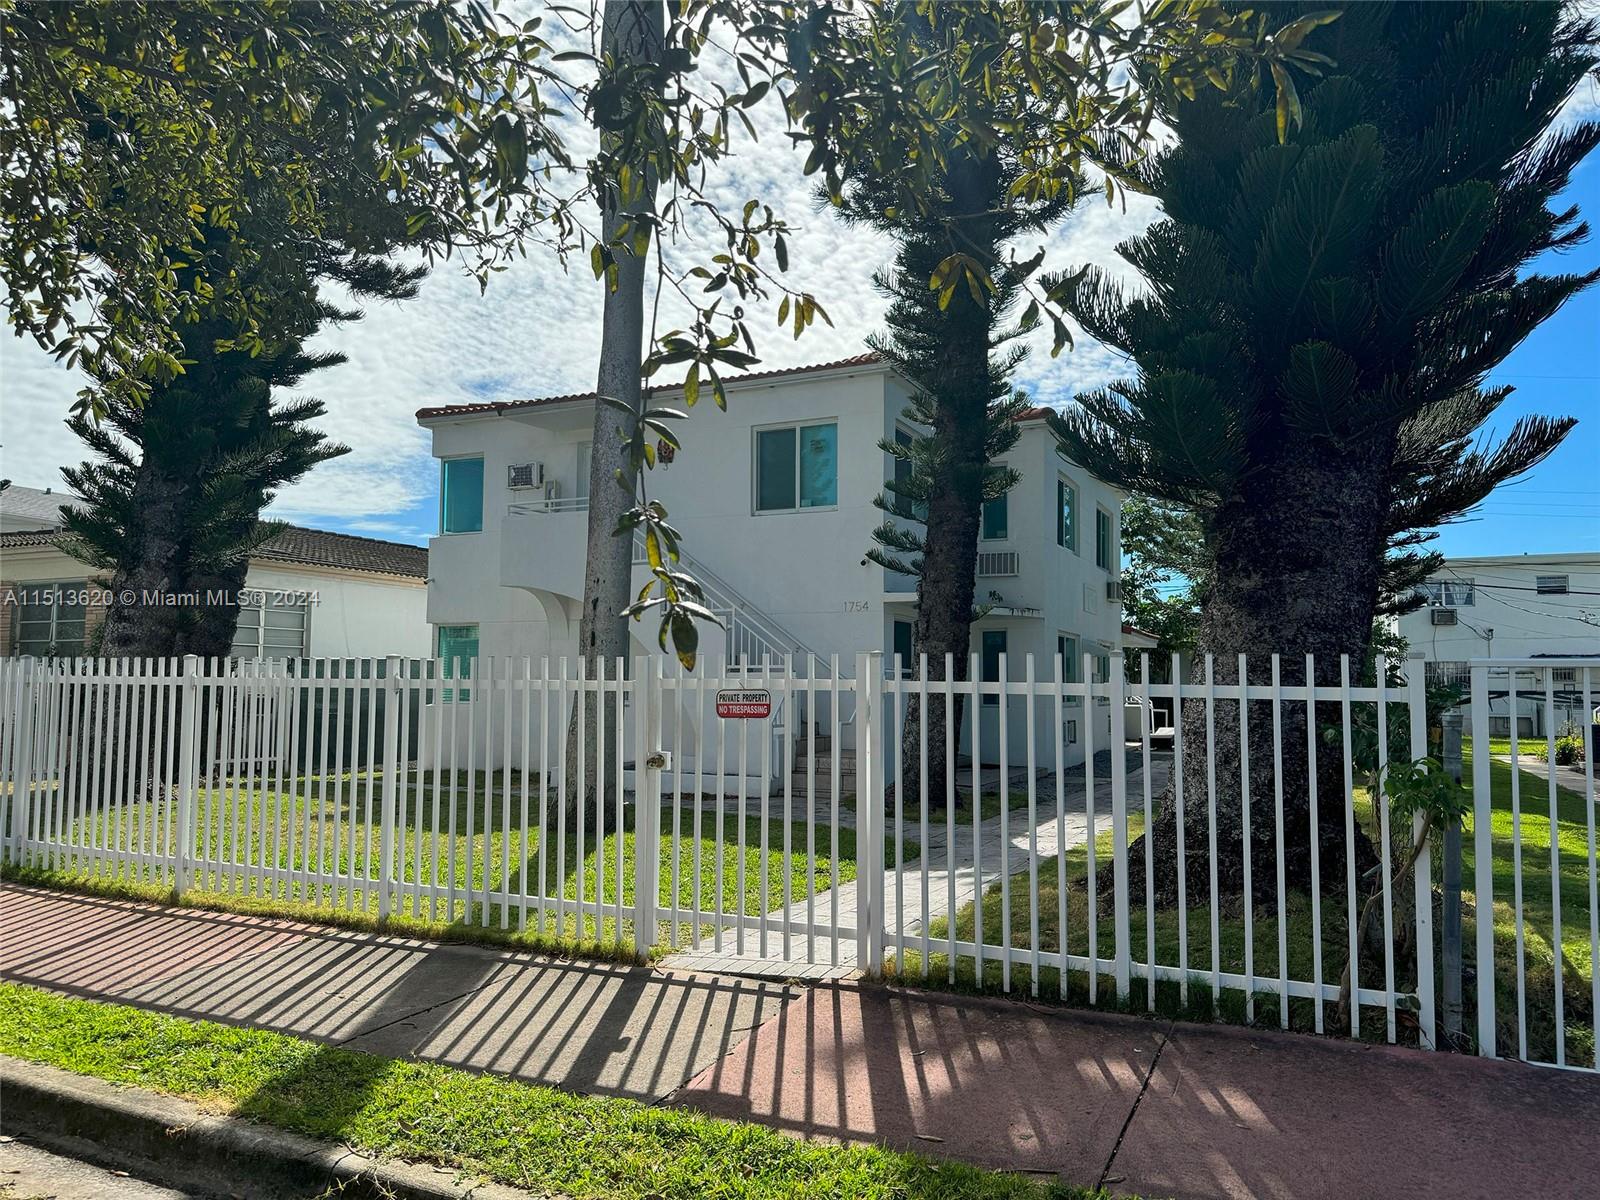 Rental Property at 1754 Marseille Dr, Miami Beach, Miami-Dade County, Florida -  - $1,300,000 MO.